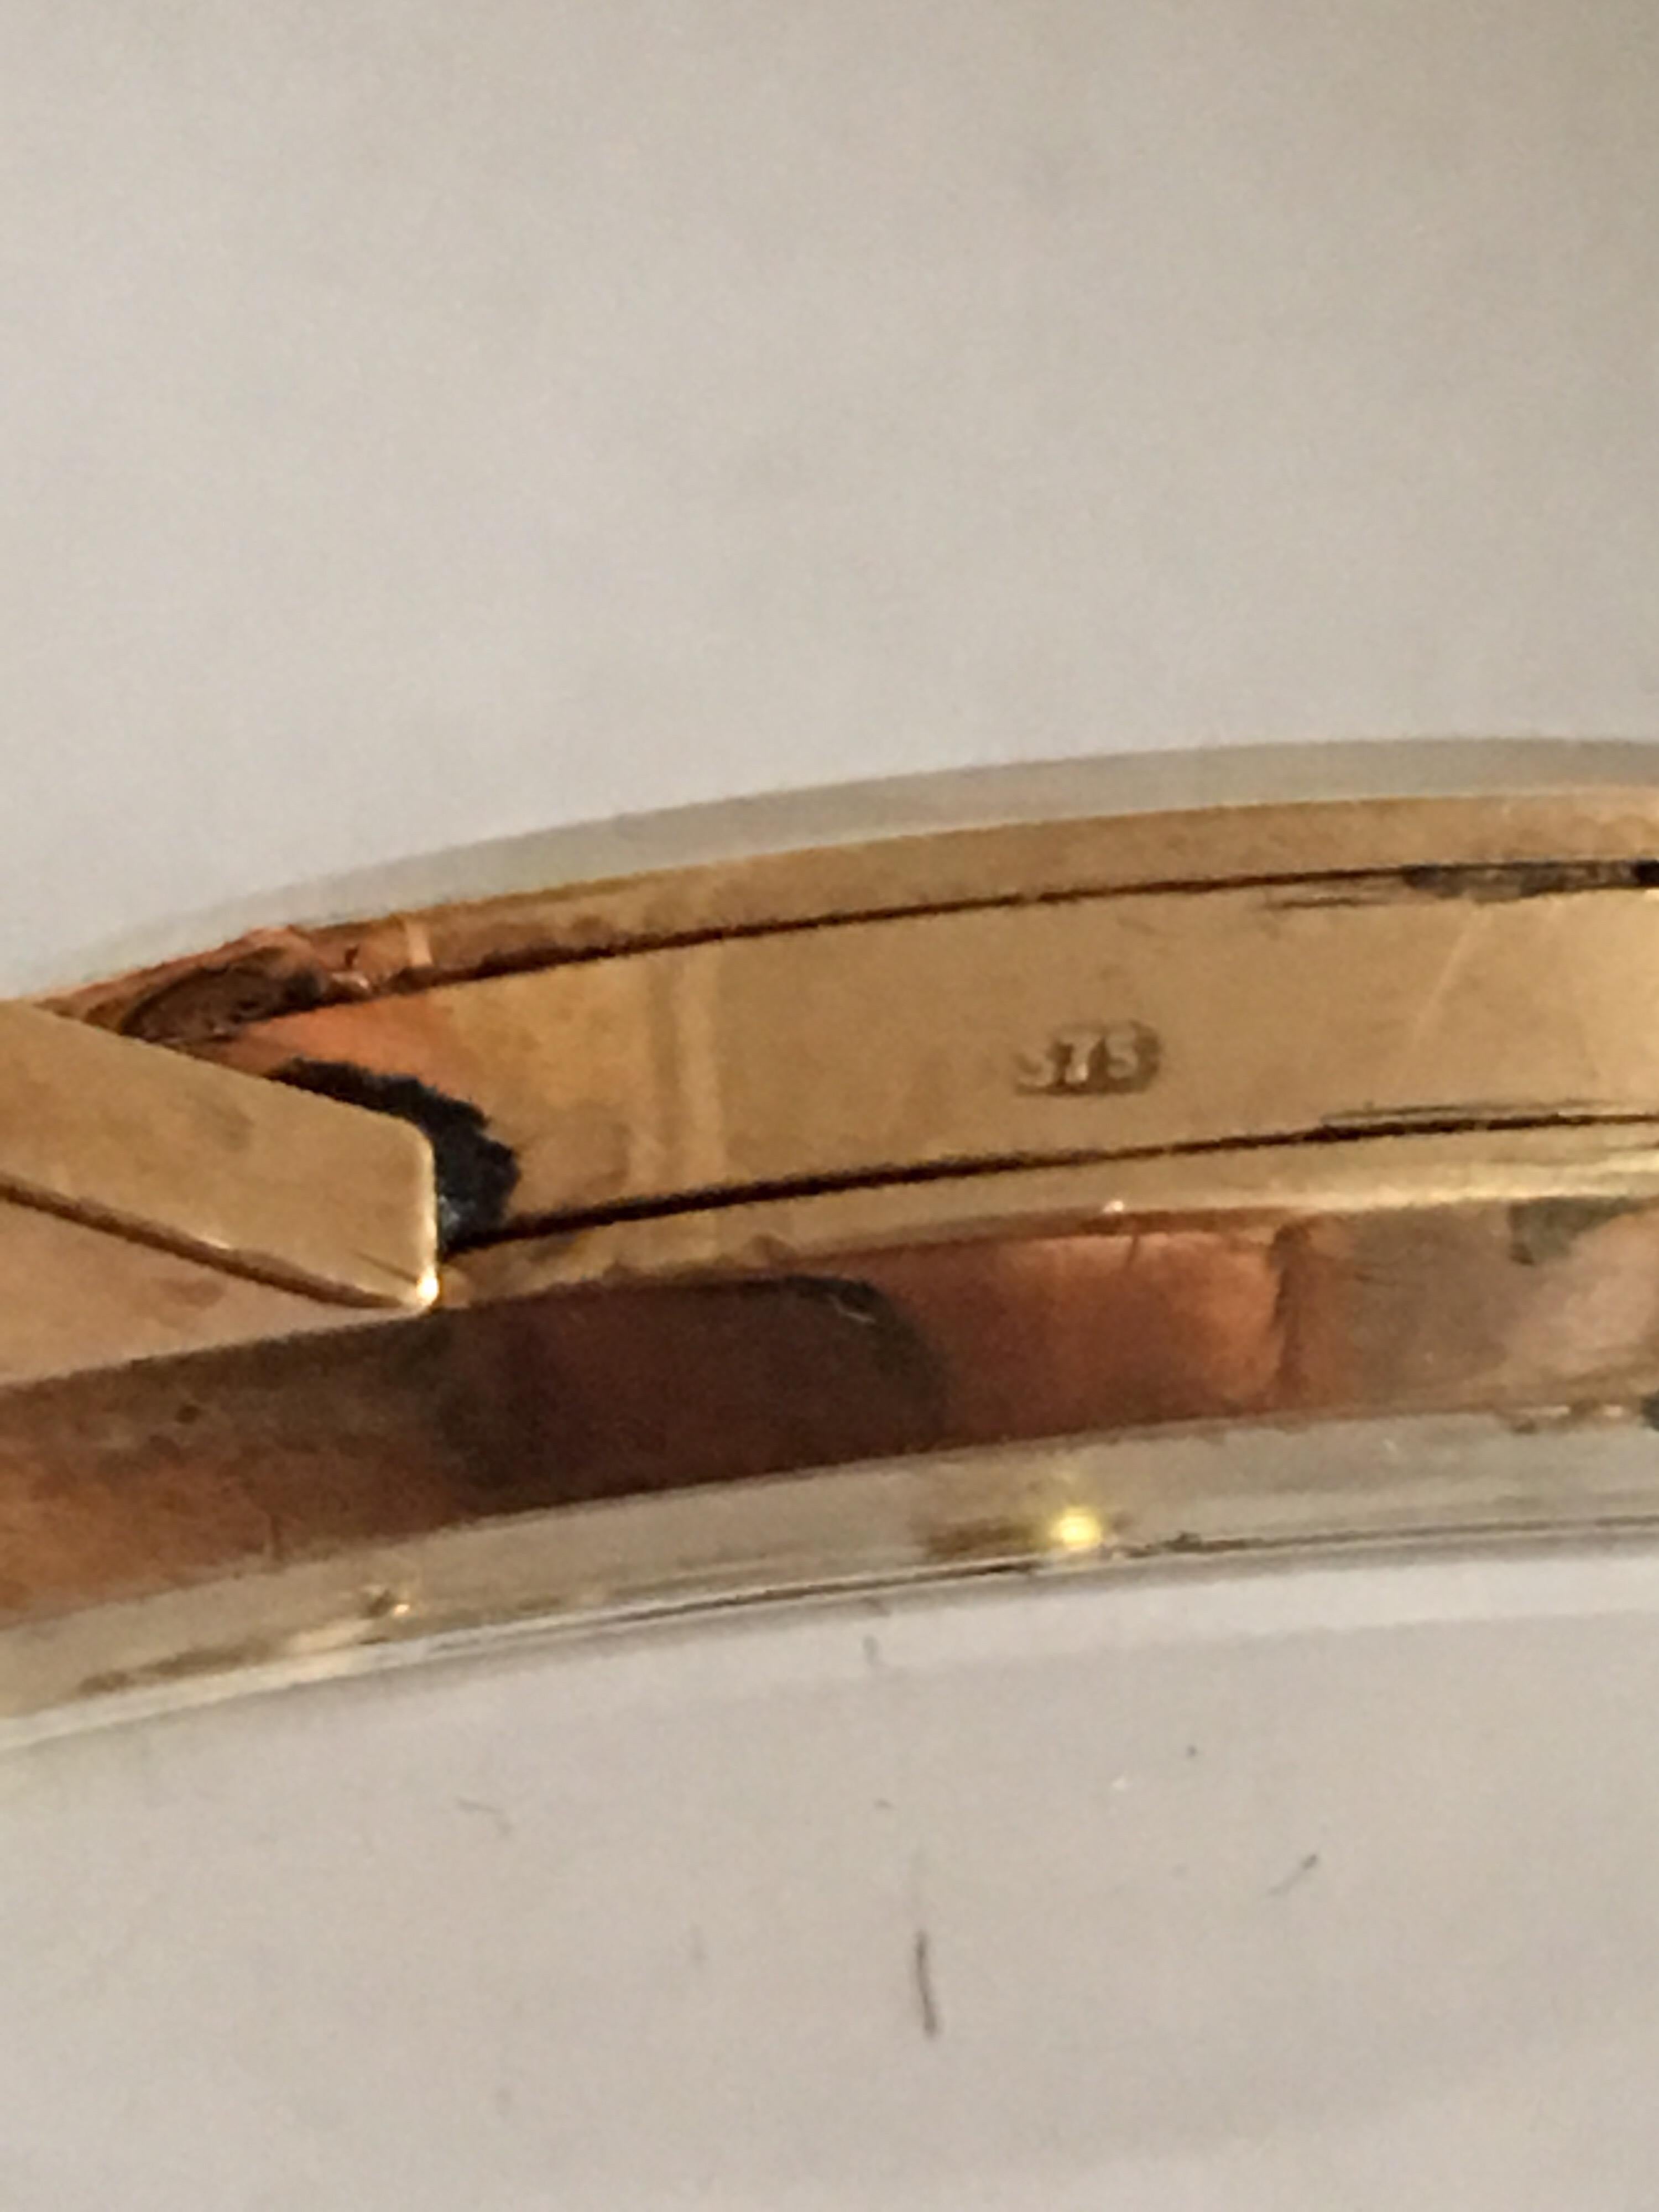 9 Karat Gold Vintage J. W. Benson London 1950s Manual Wristwatch In Fair Condition For Sale In Carlisle, GB